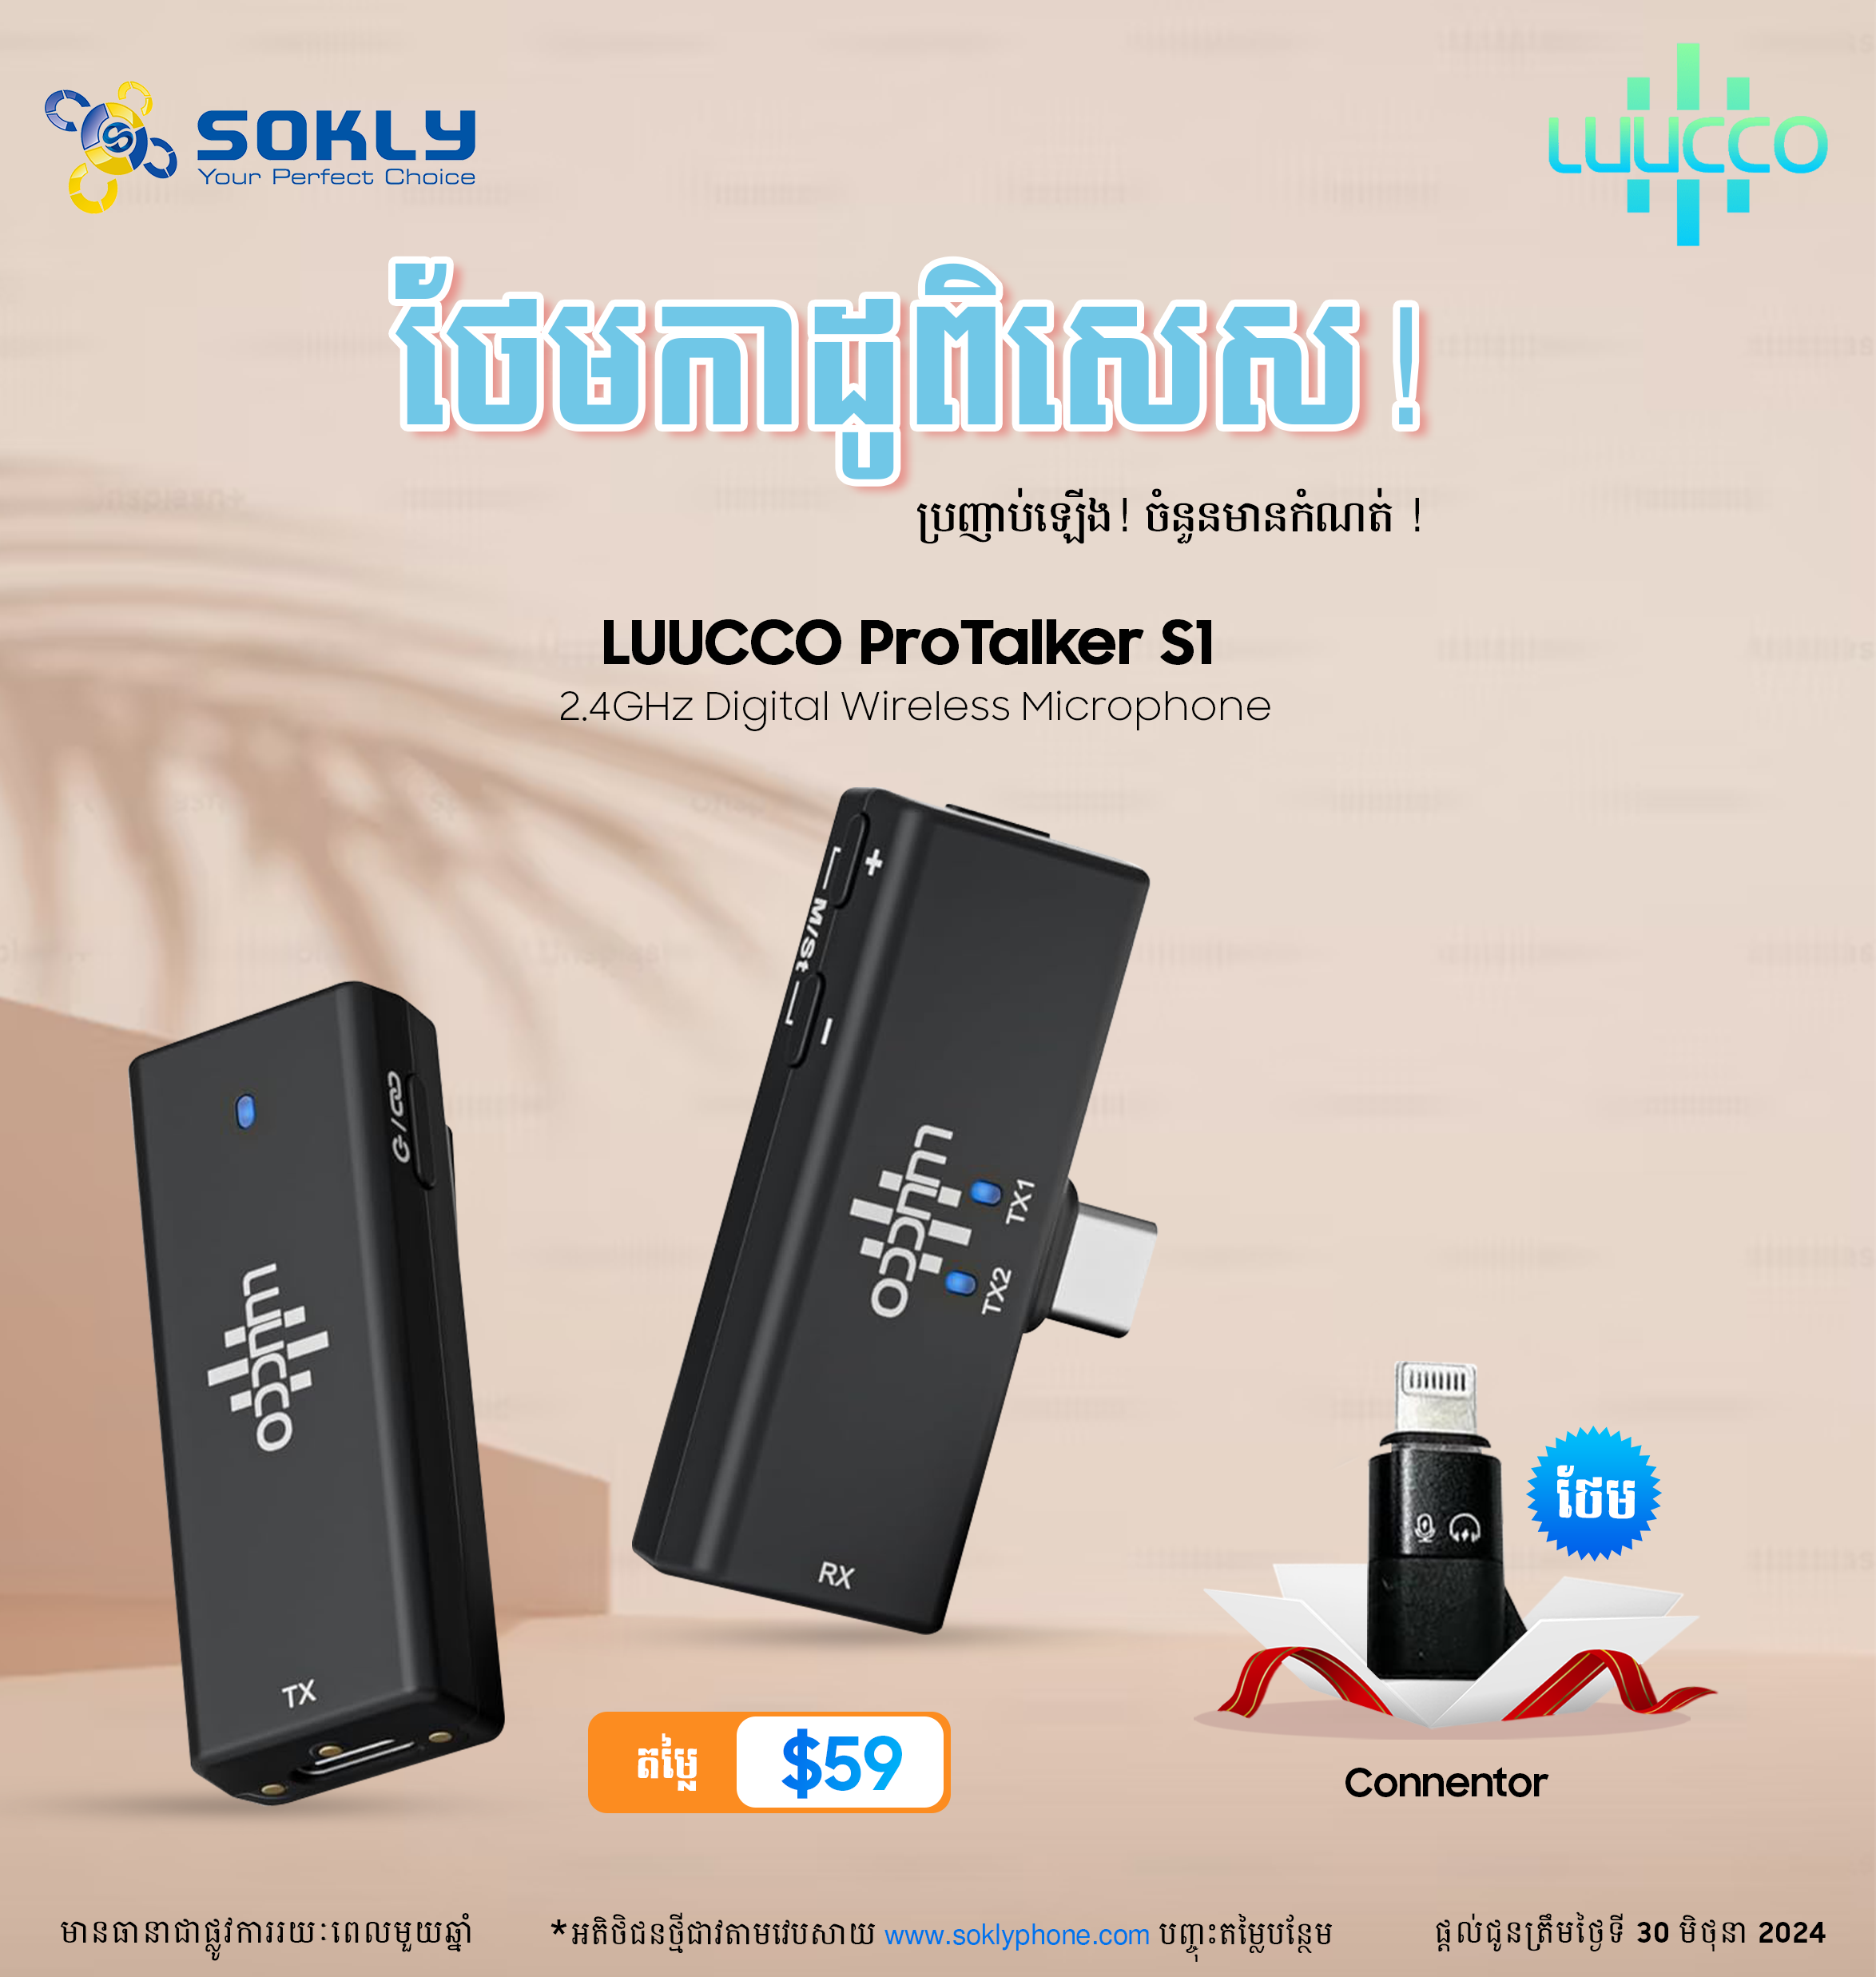 LUUCCO ProTalker S1 2.4GHz Digital Wireless Microphone